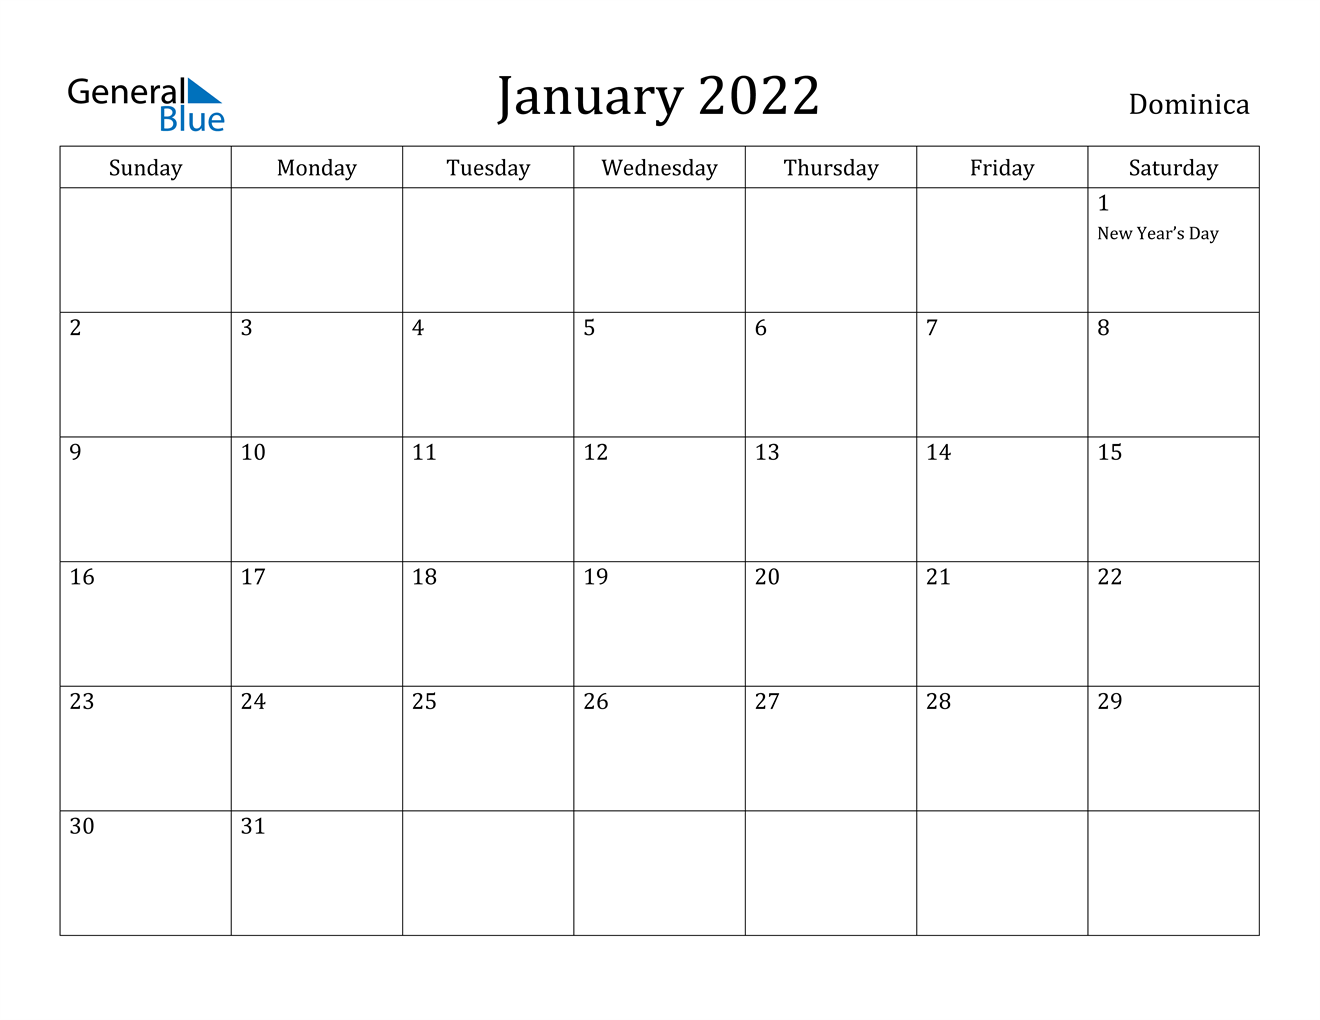 January 2022 Calendar - Dominica